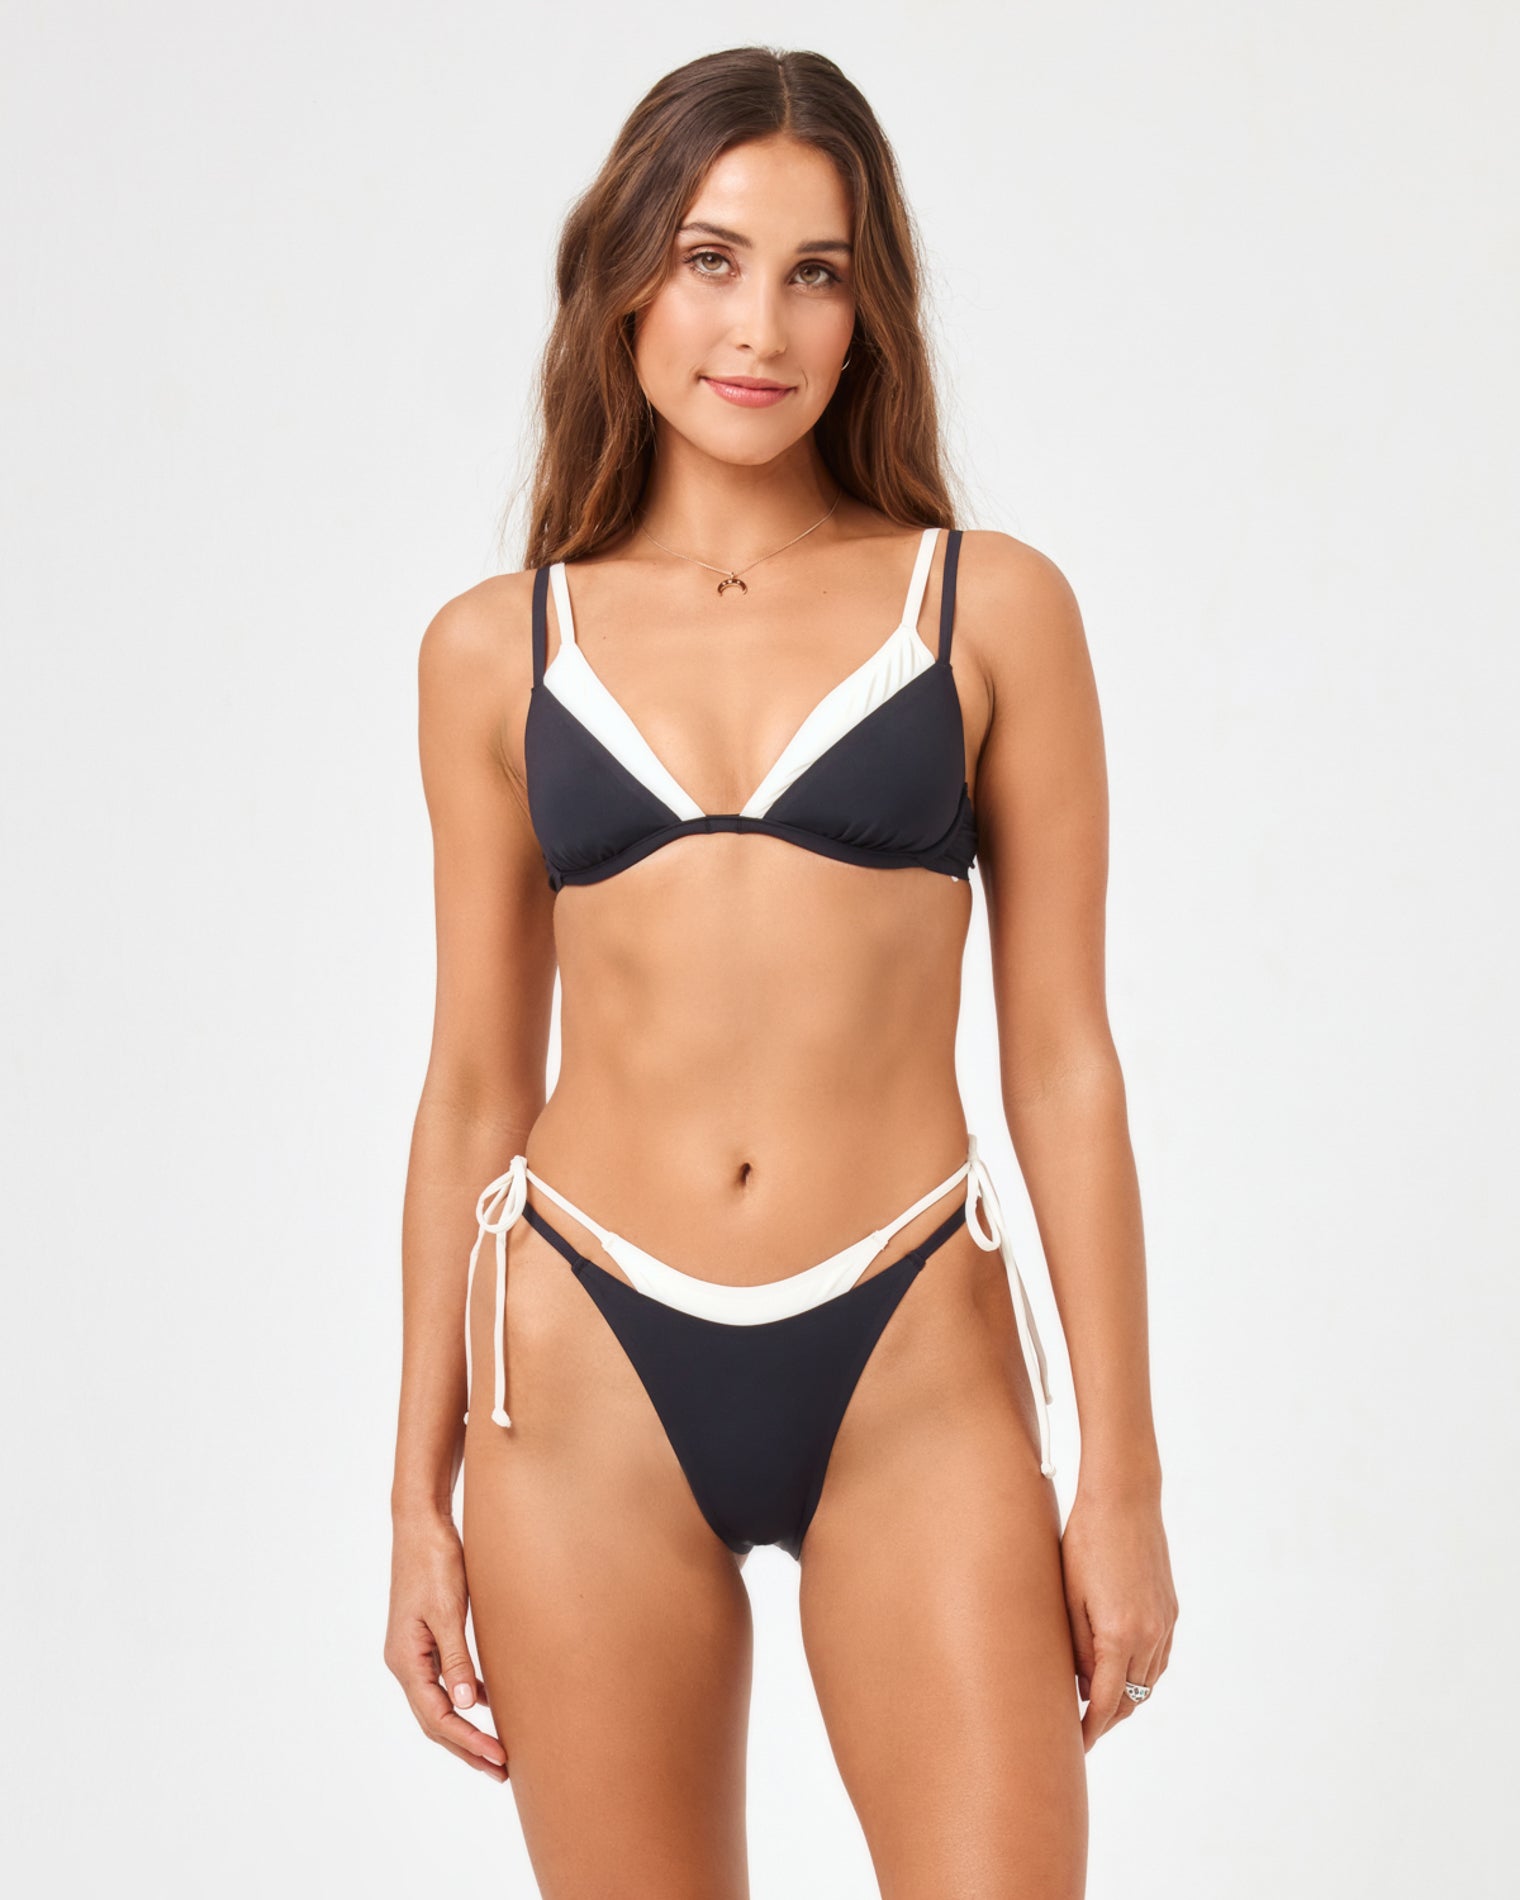 Hot Summer Women's Sexy Bikinis Push Up Bras Swimsuit Bikini Beach Swimwear  Lingerie Ladies Bra Sets XS-XL